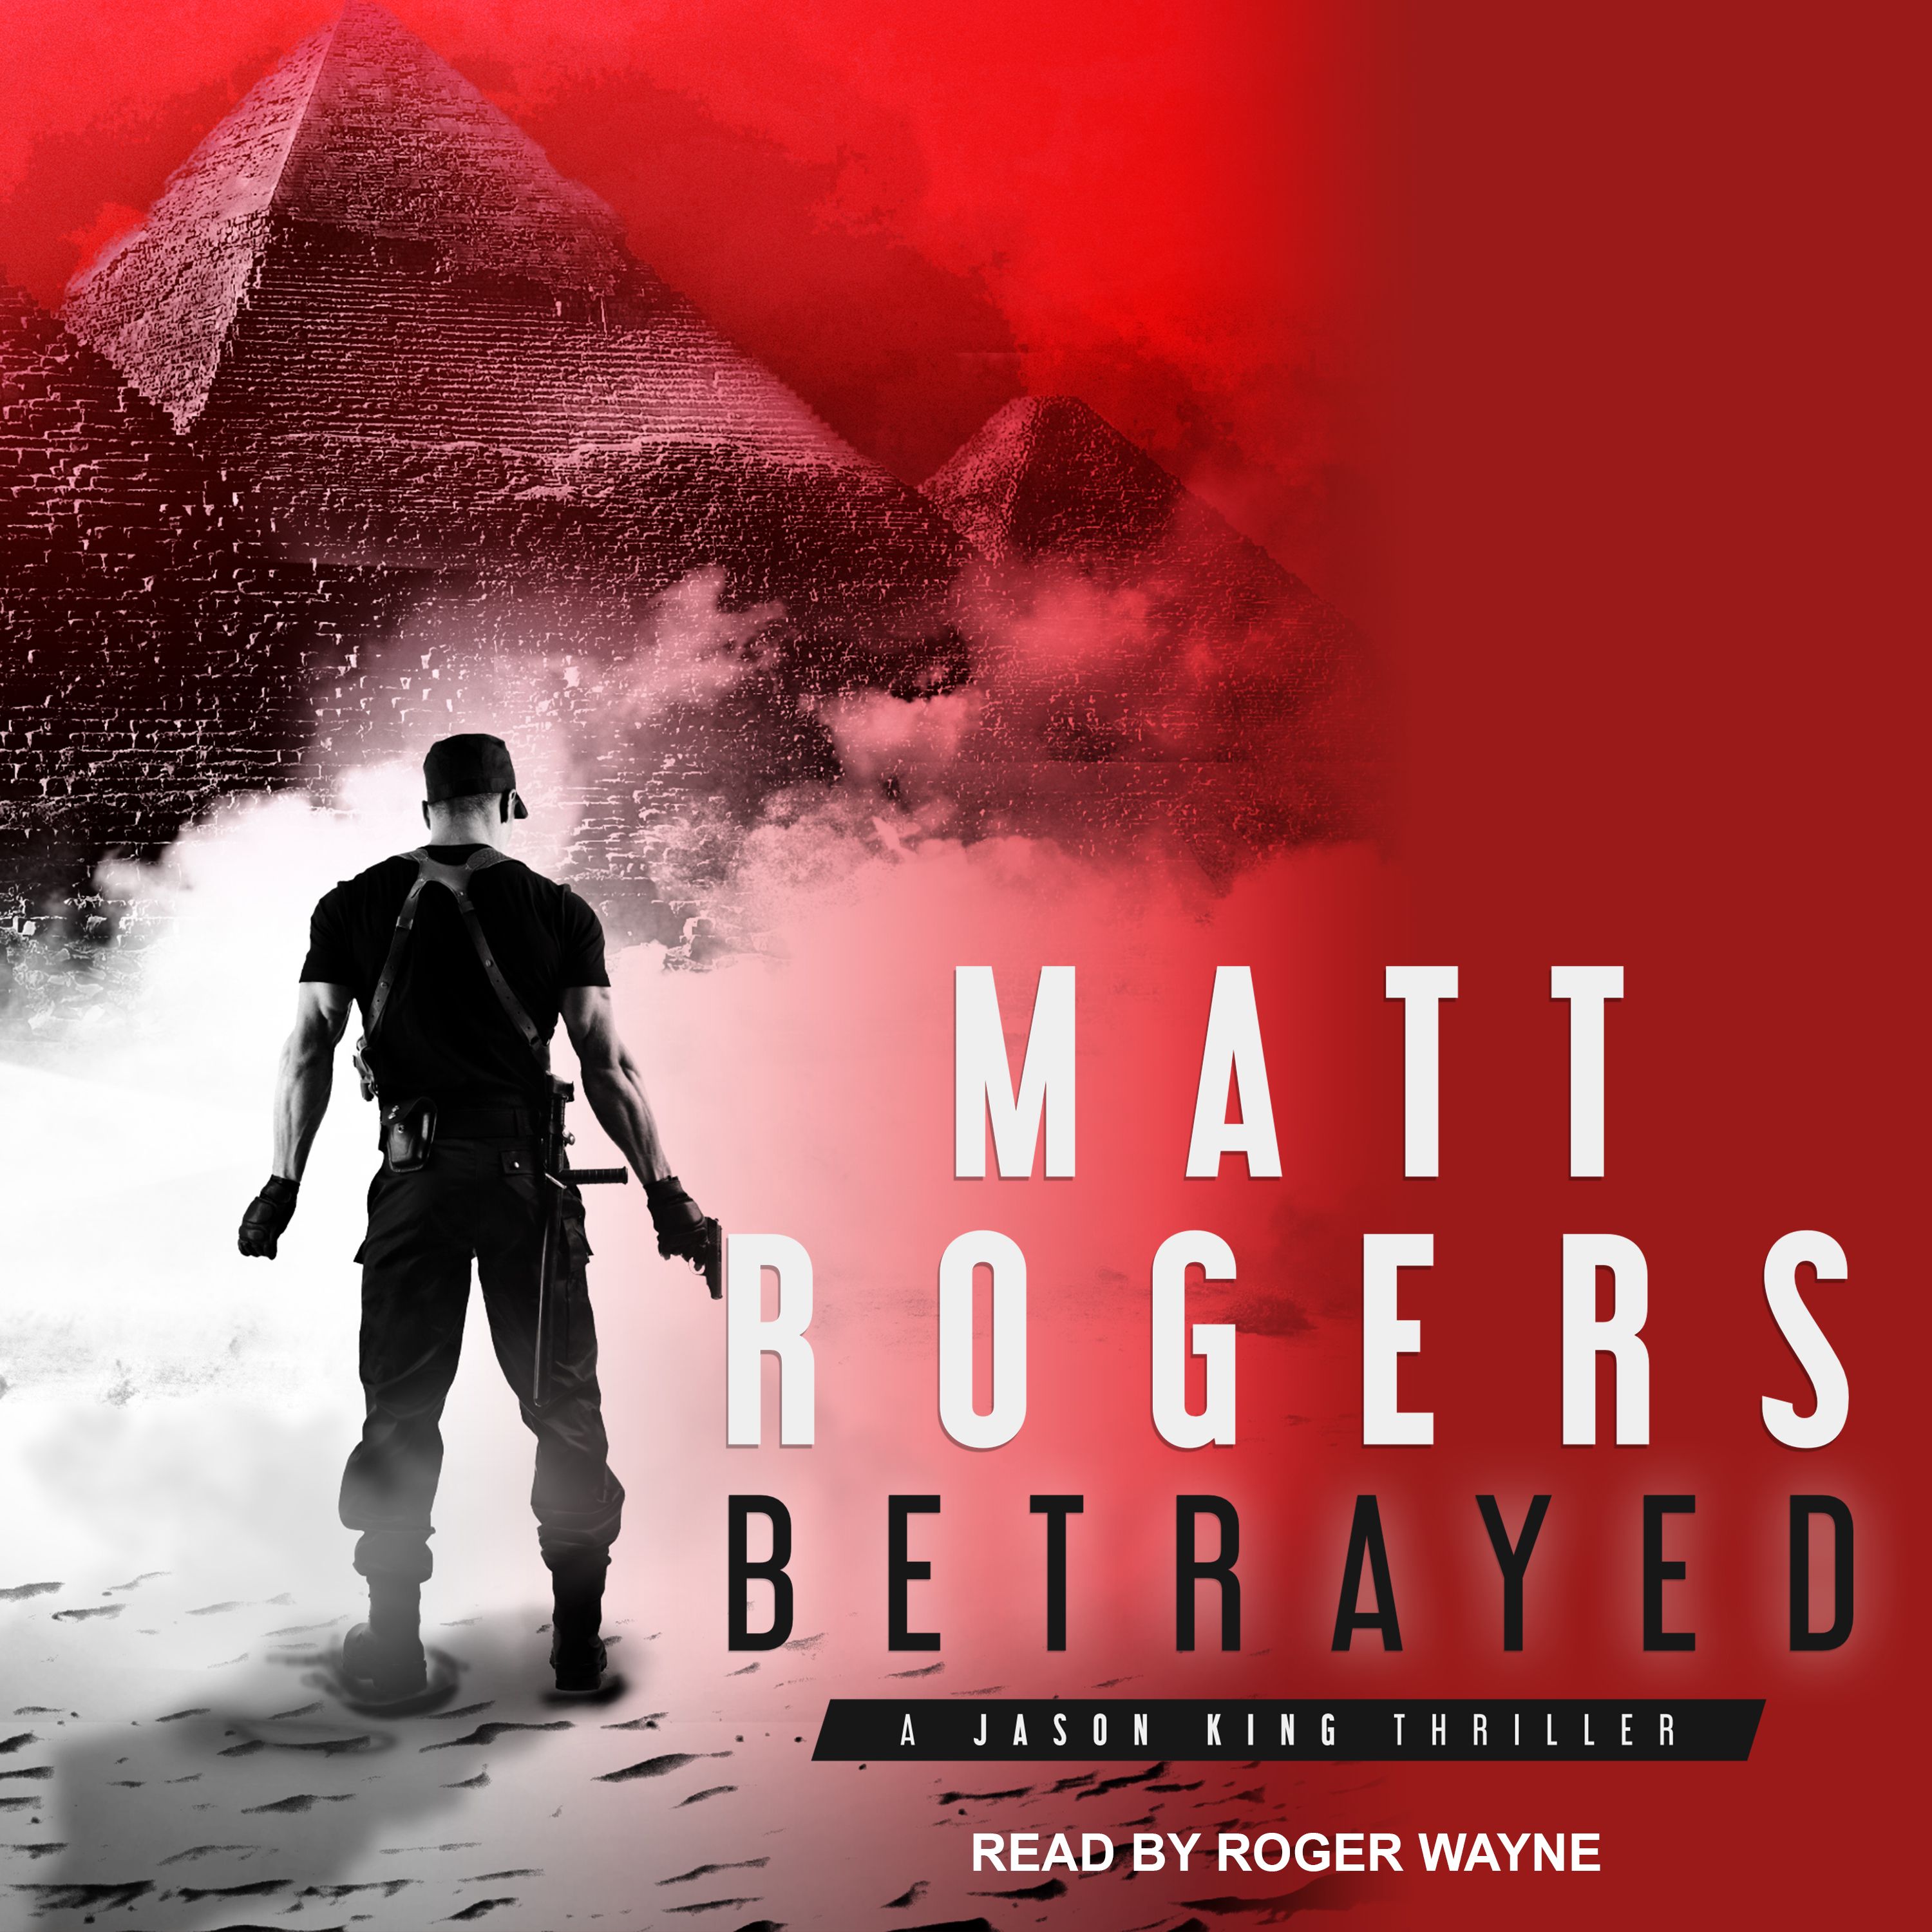 Jason King: Betrayed: A Jason King Thriller (Audiobook) - image 1 of 1